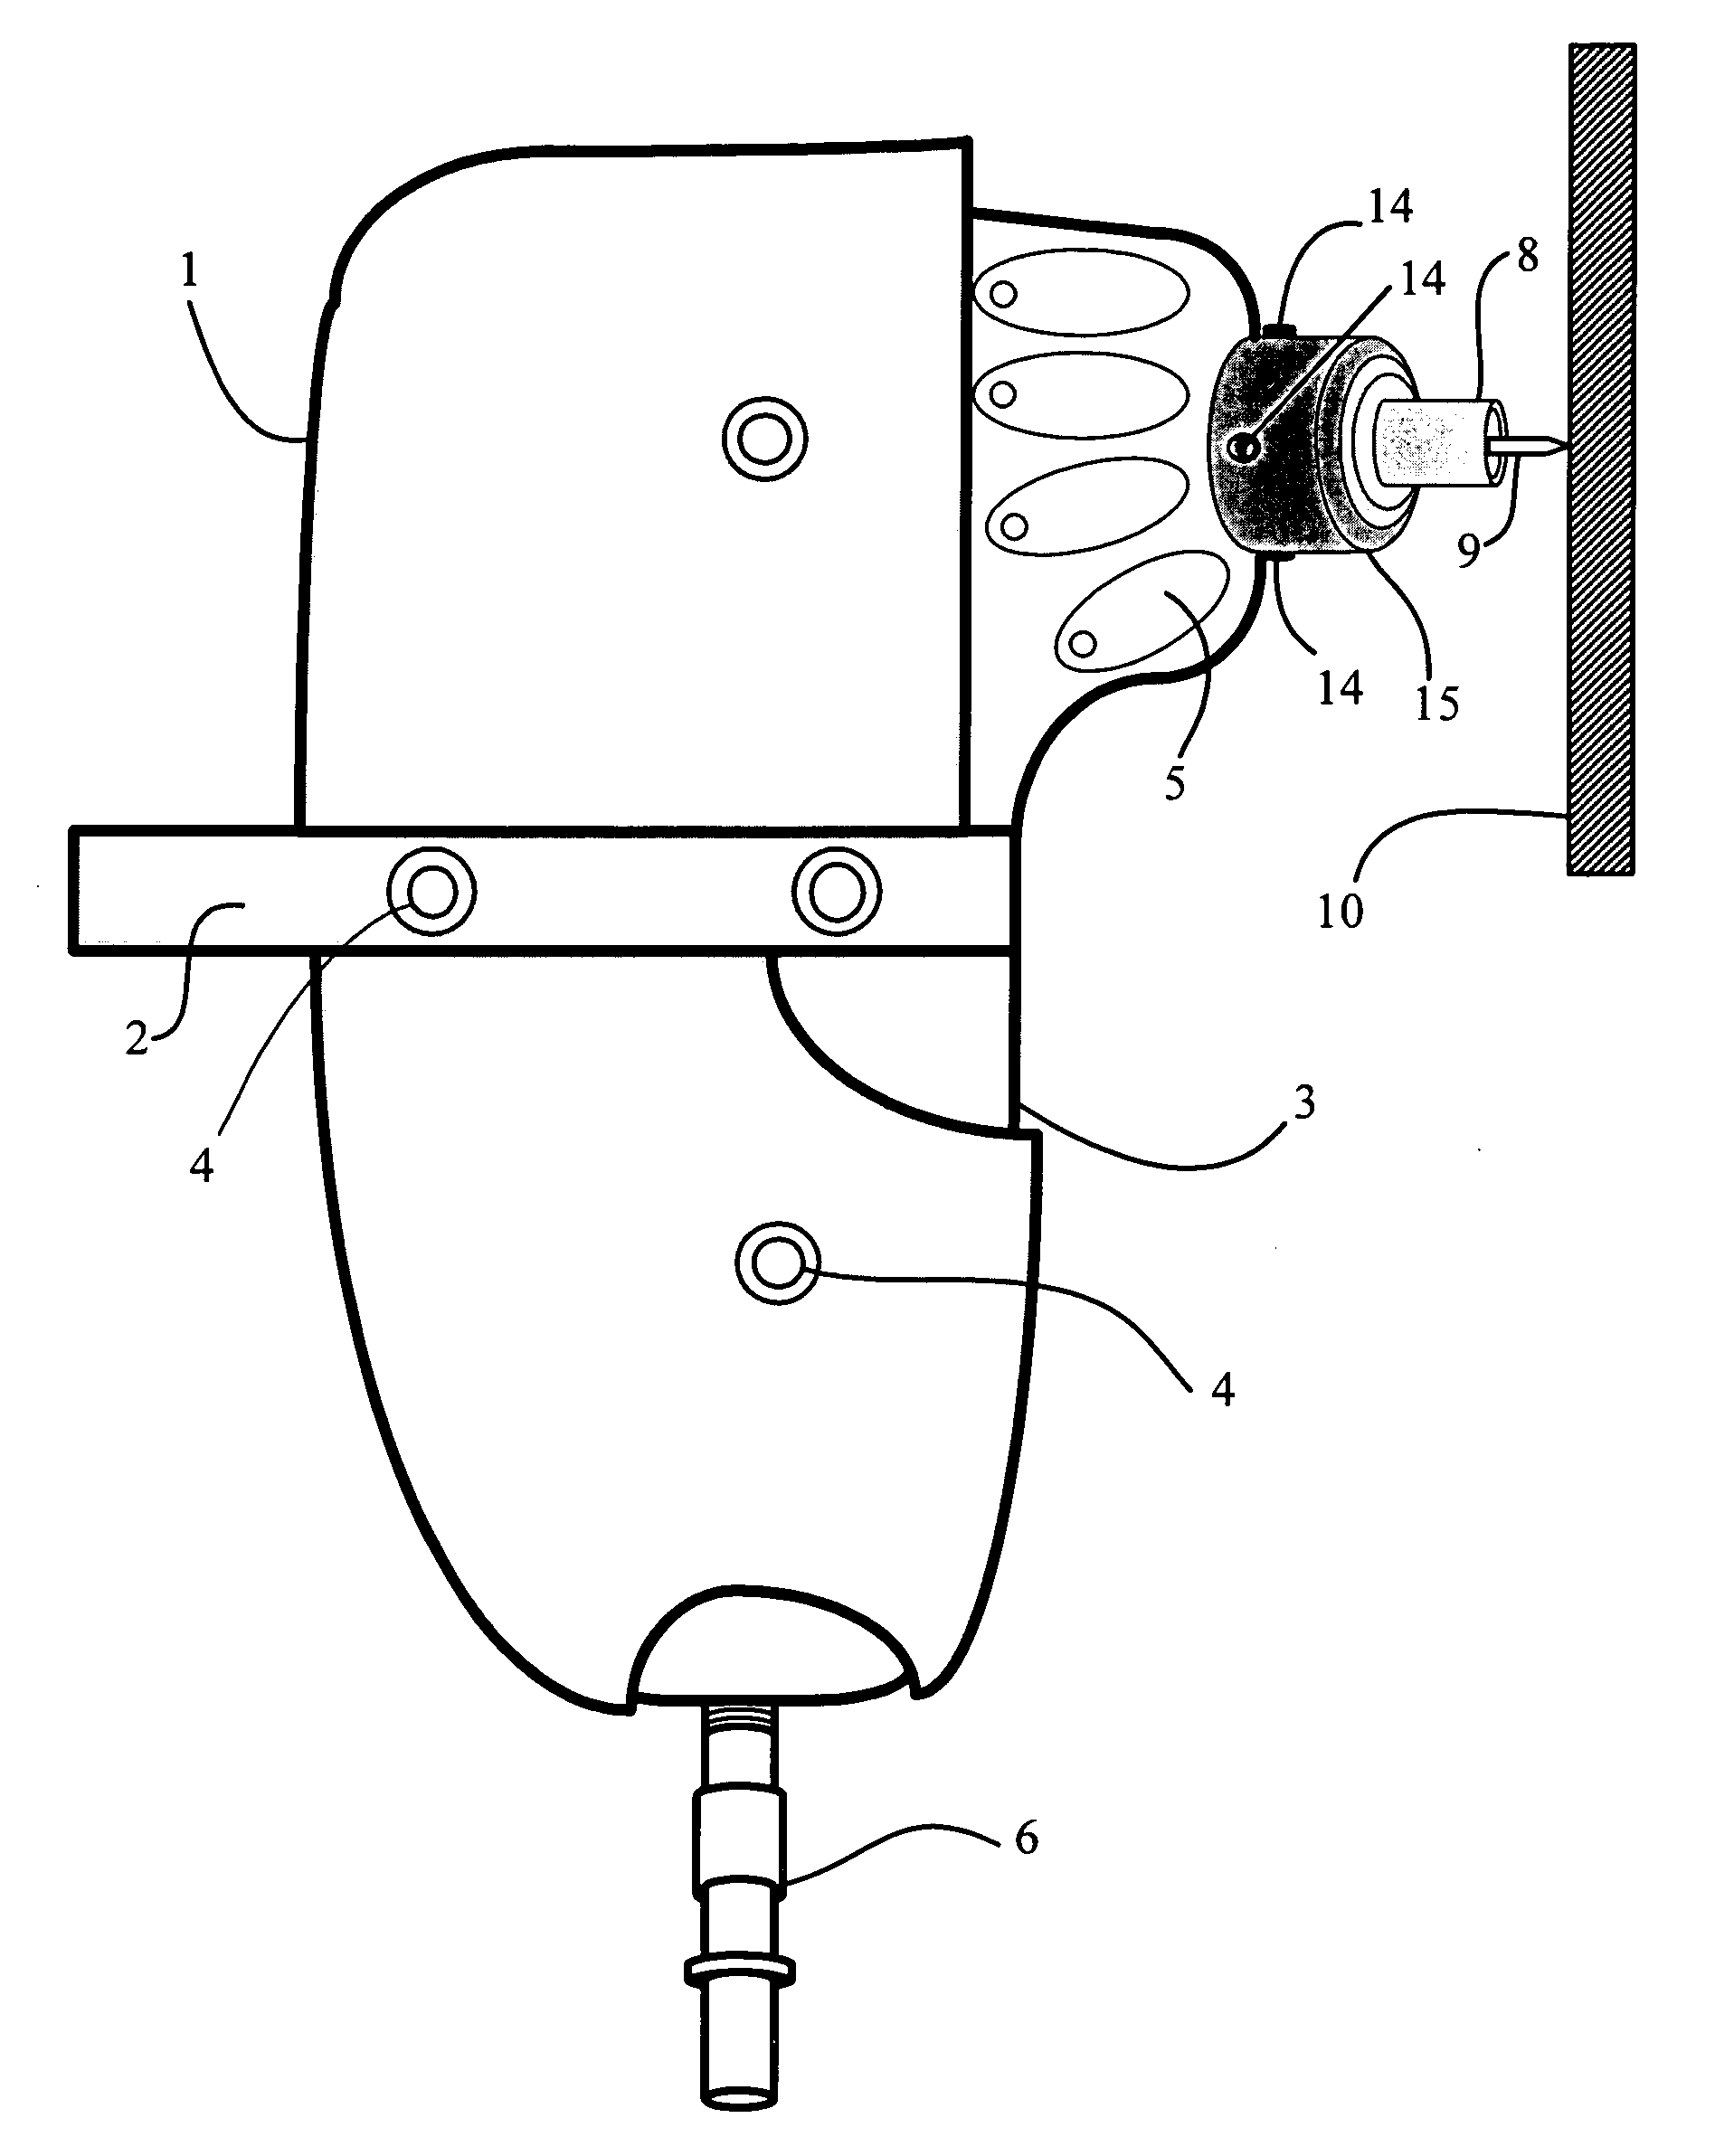 External Nailing Device Adaptor